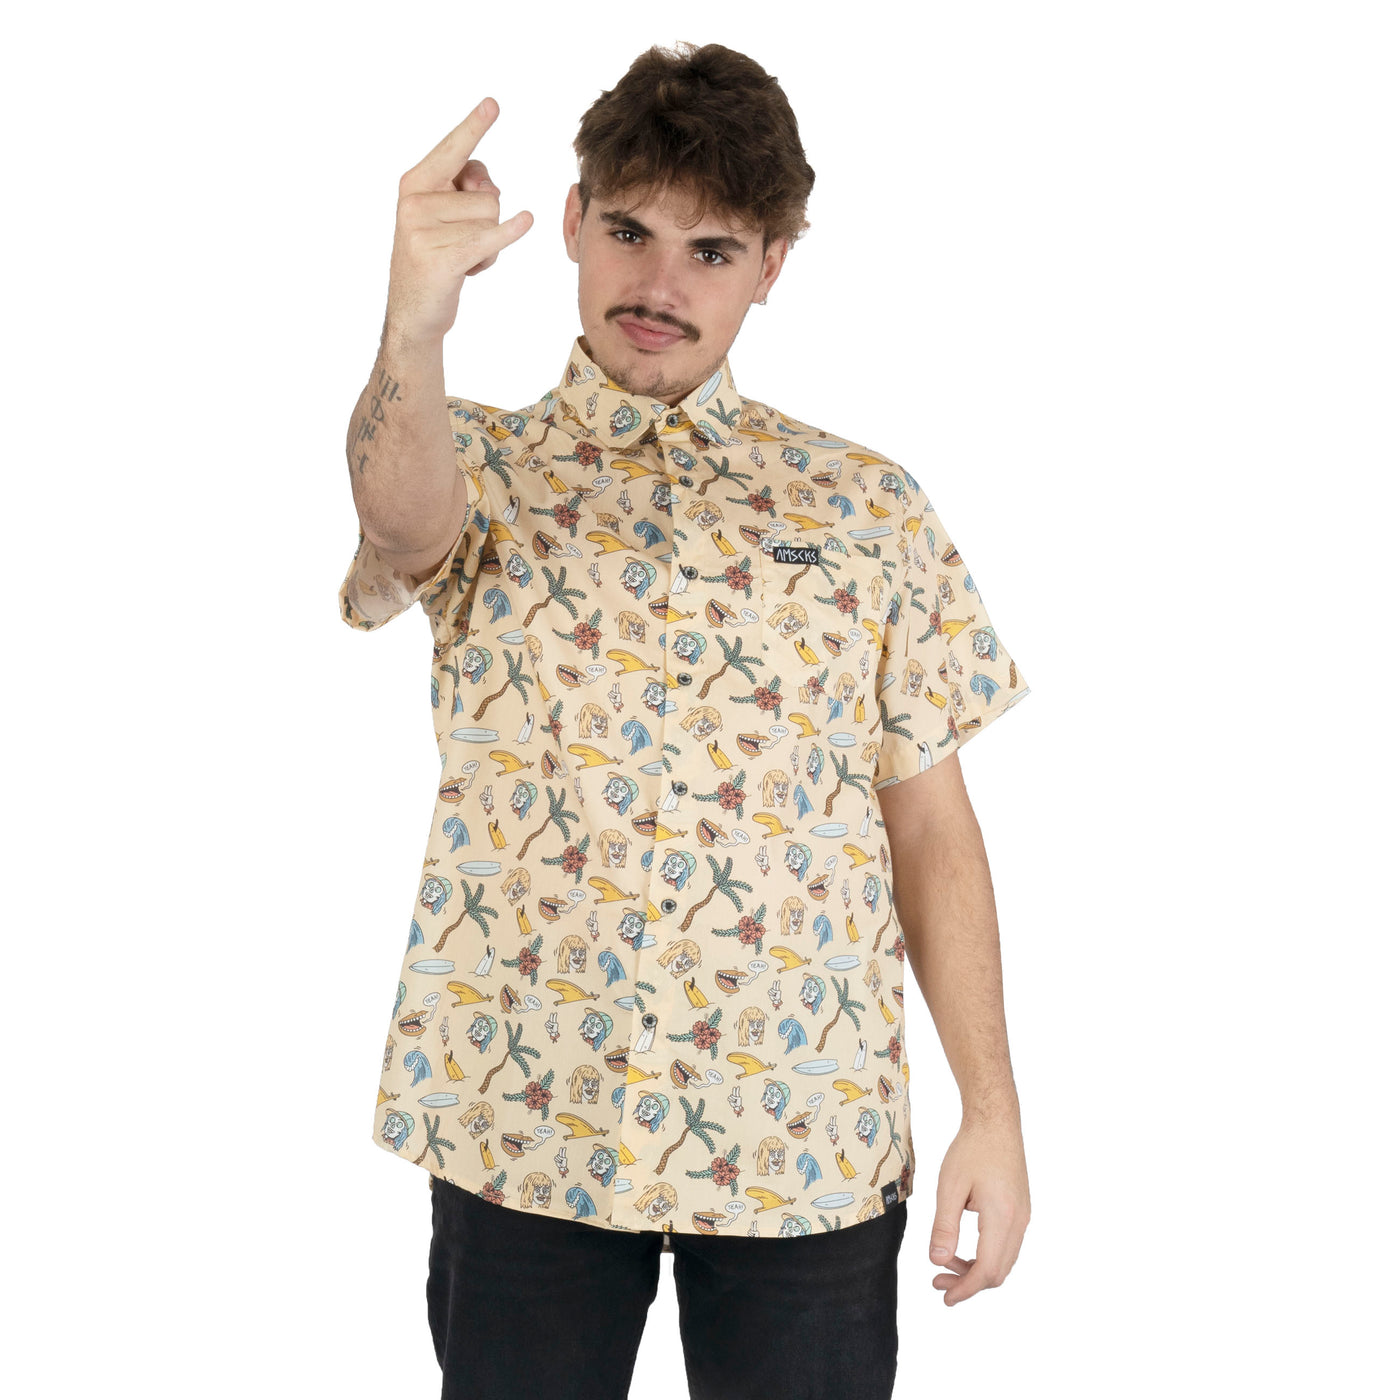 Stinky Surfer - Shirt